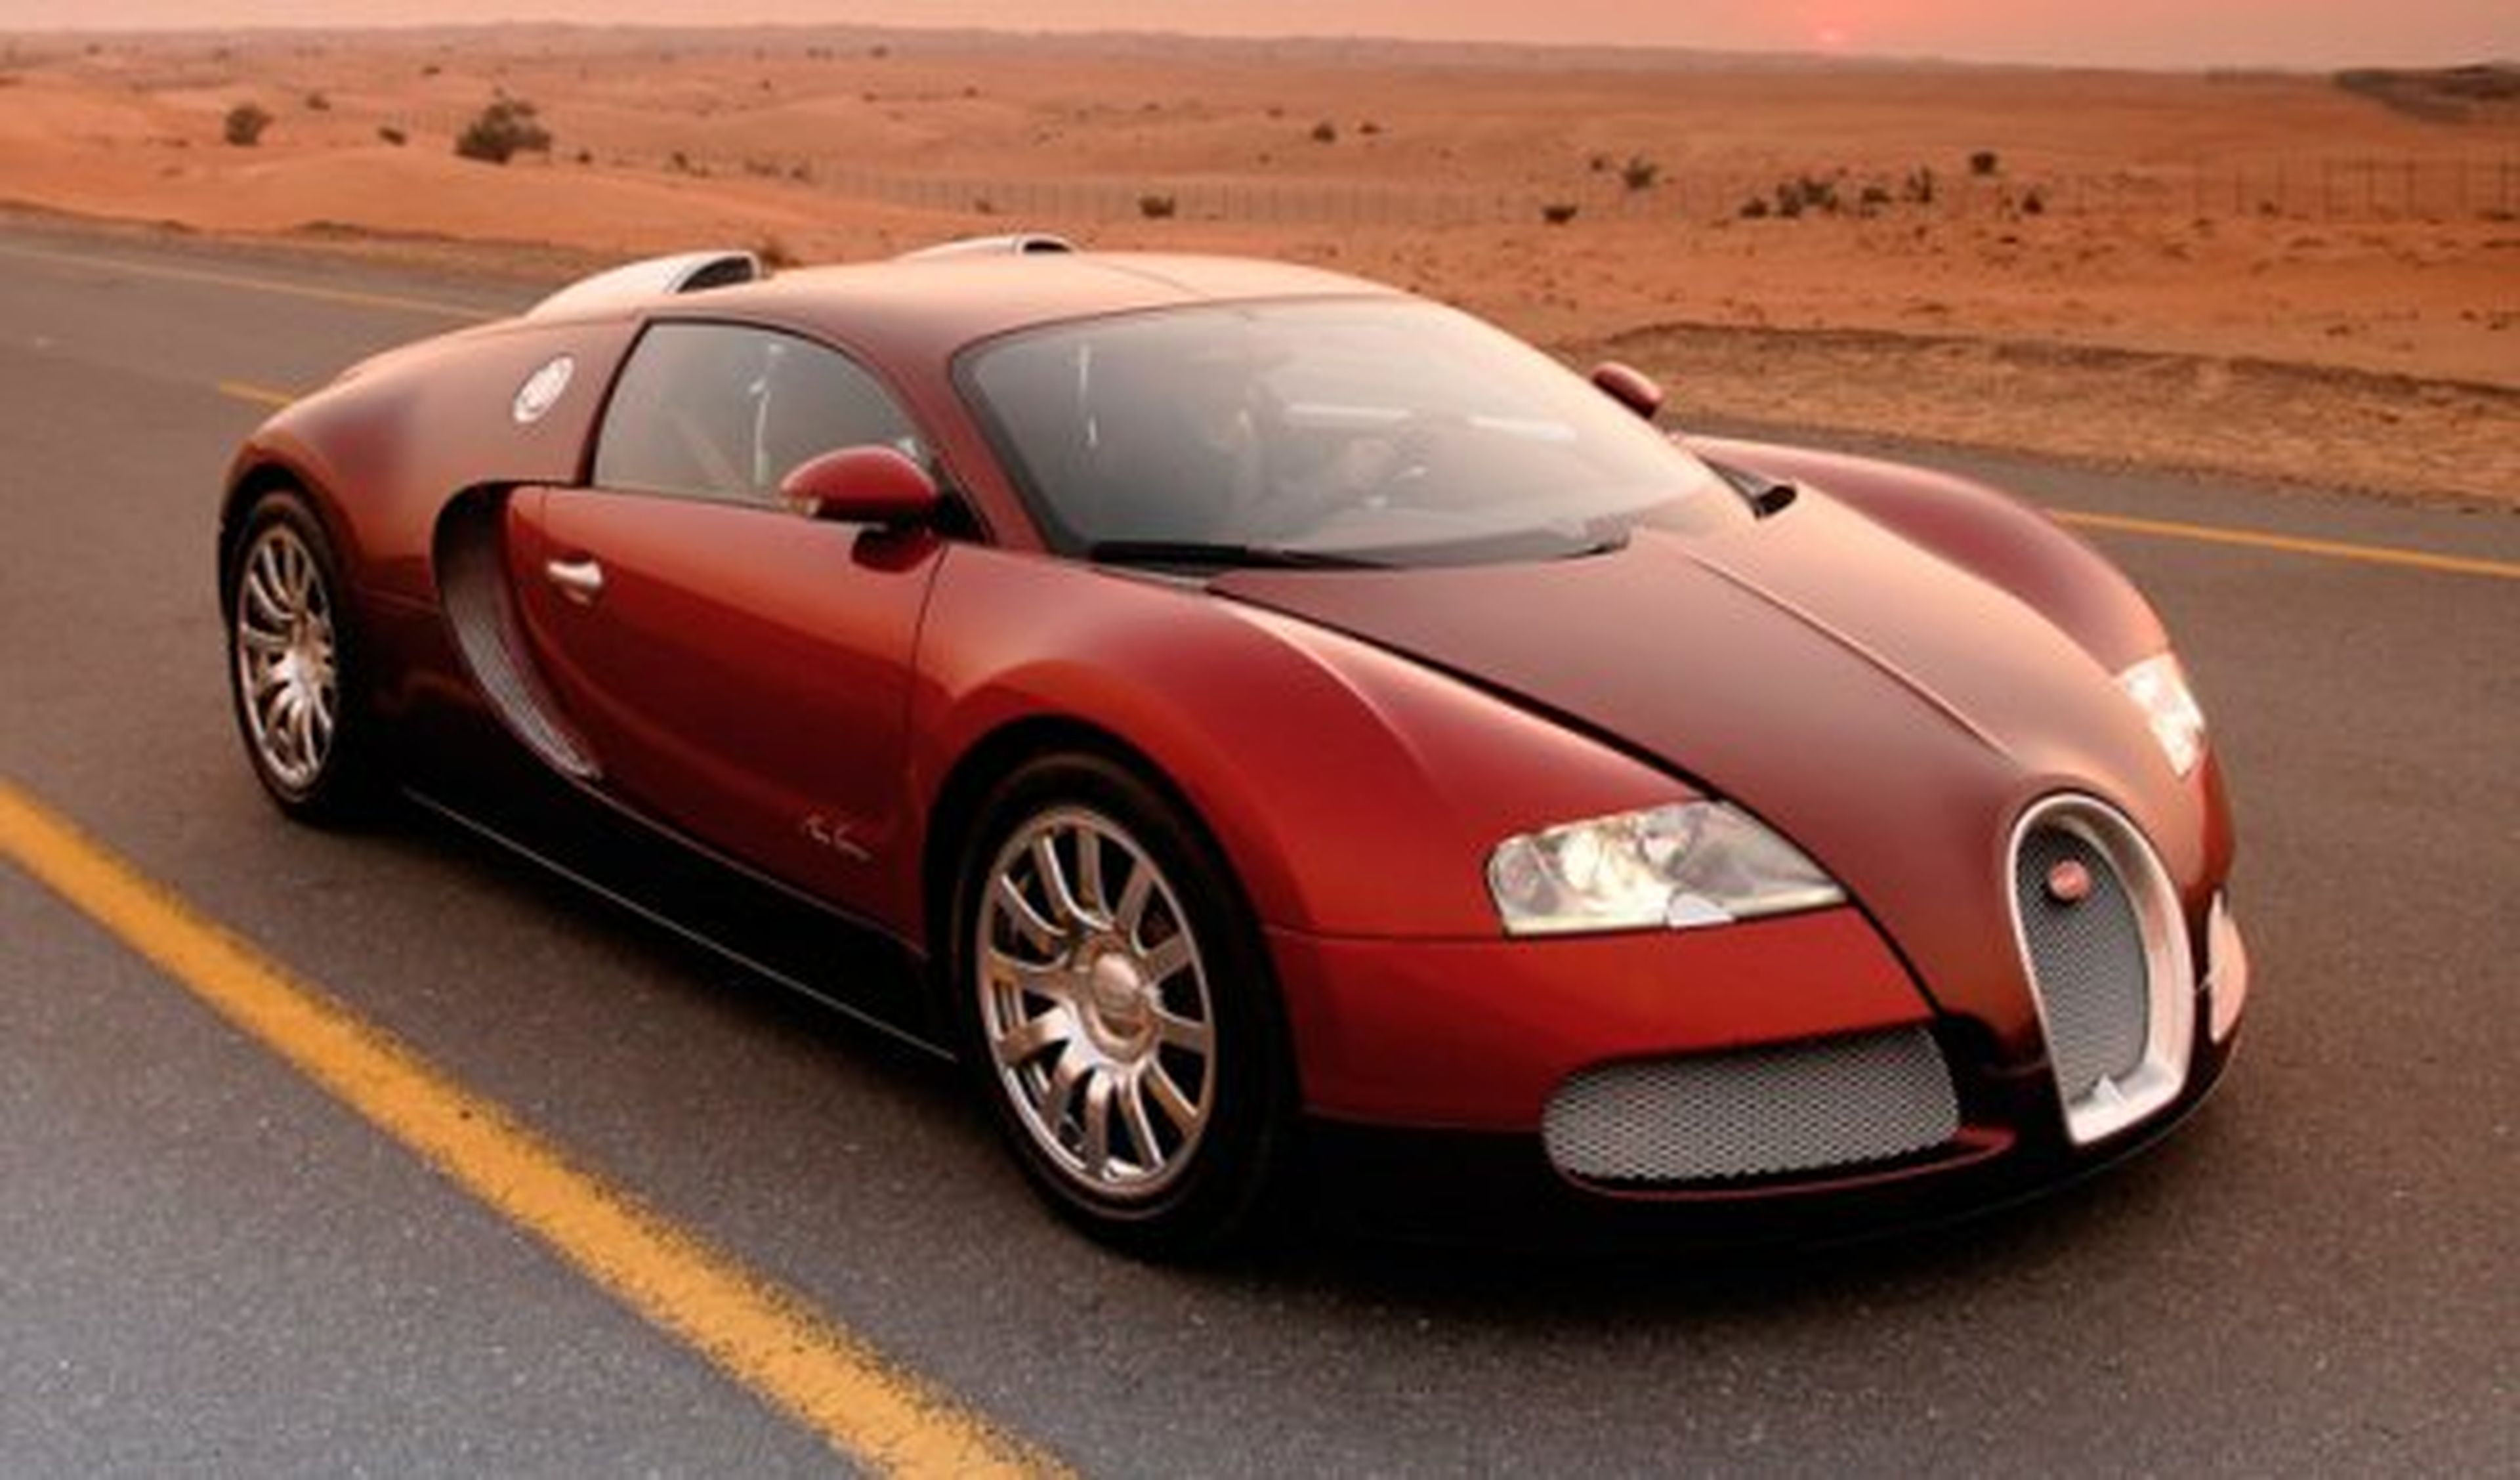 Subastan una réplica del Bugatti Veyron sin terminar